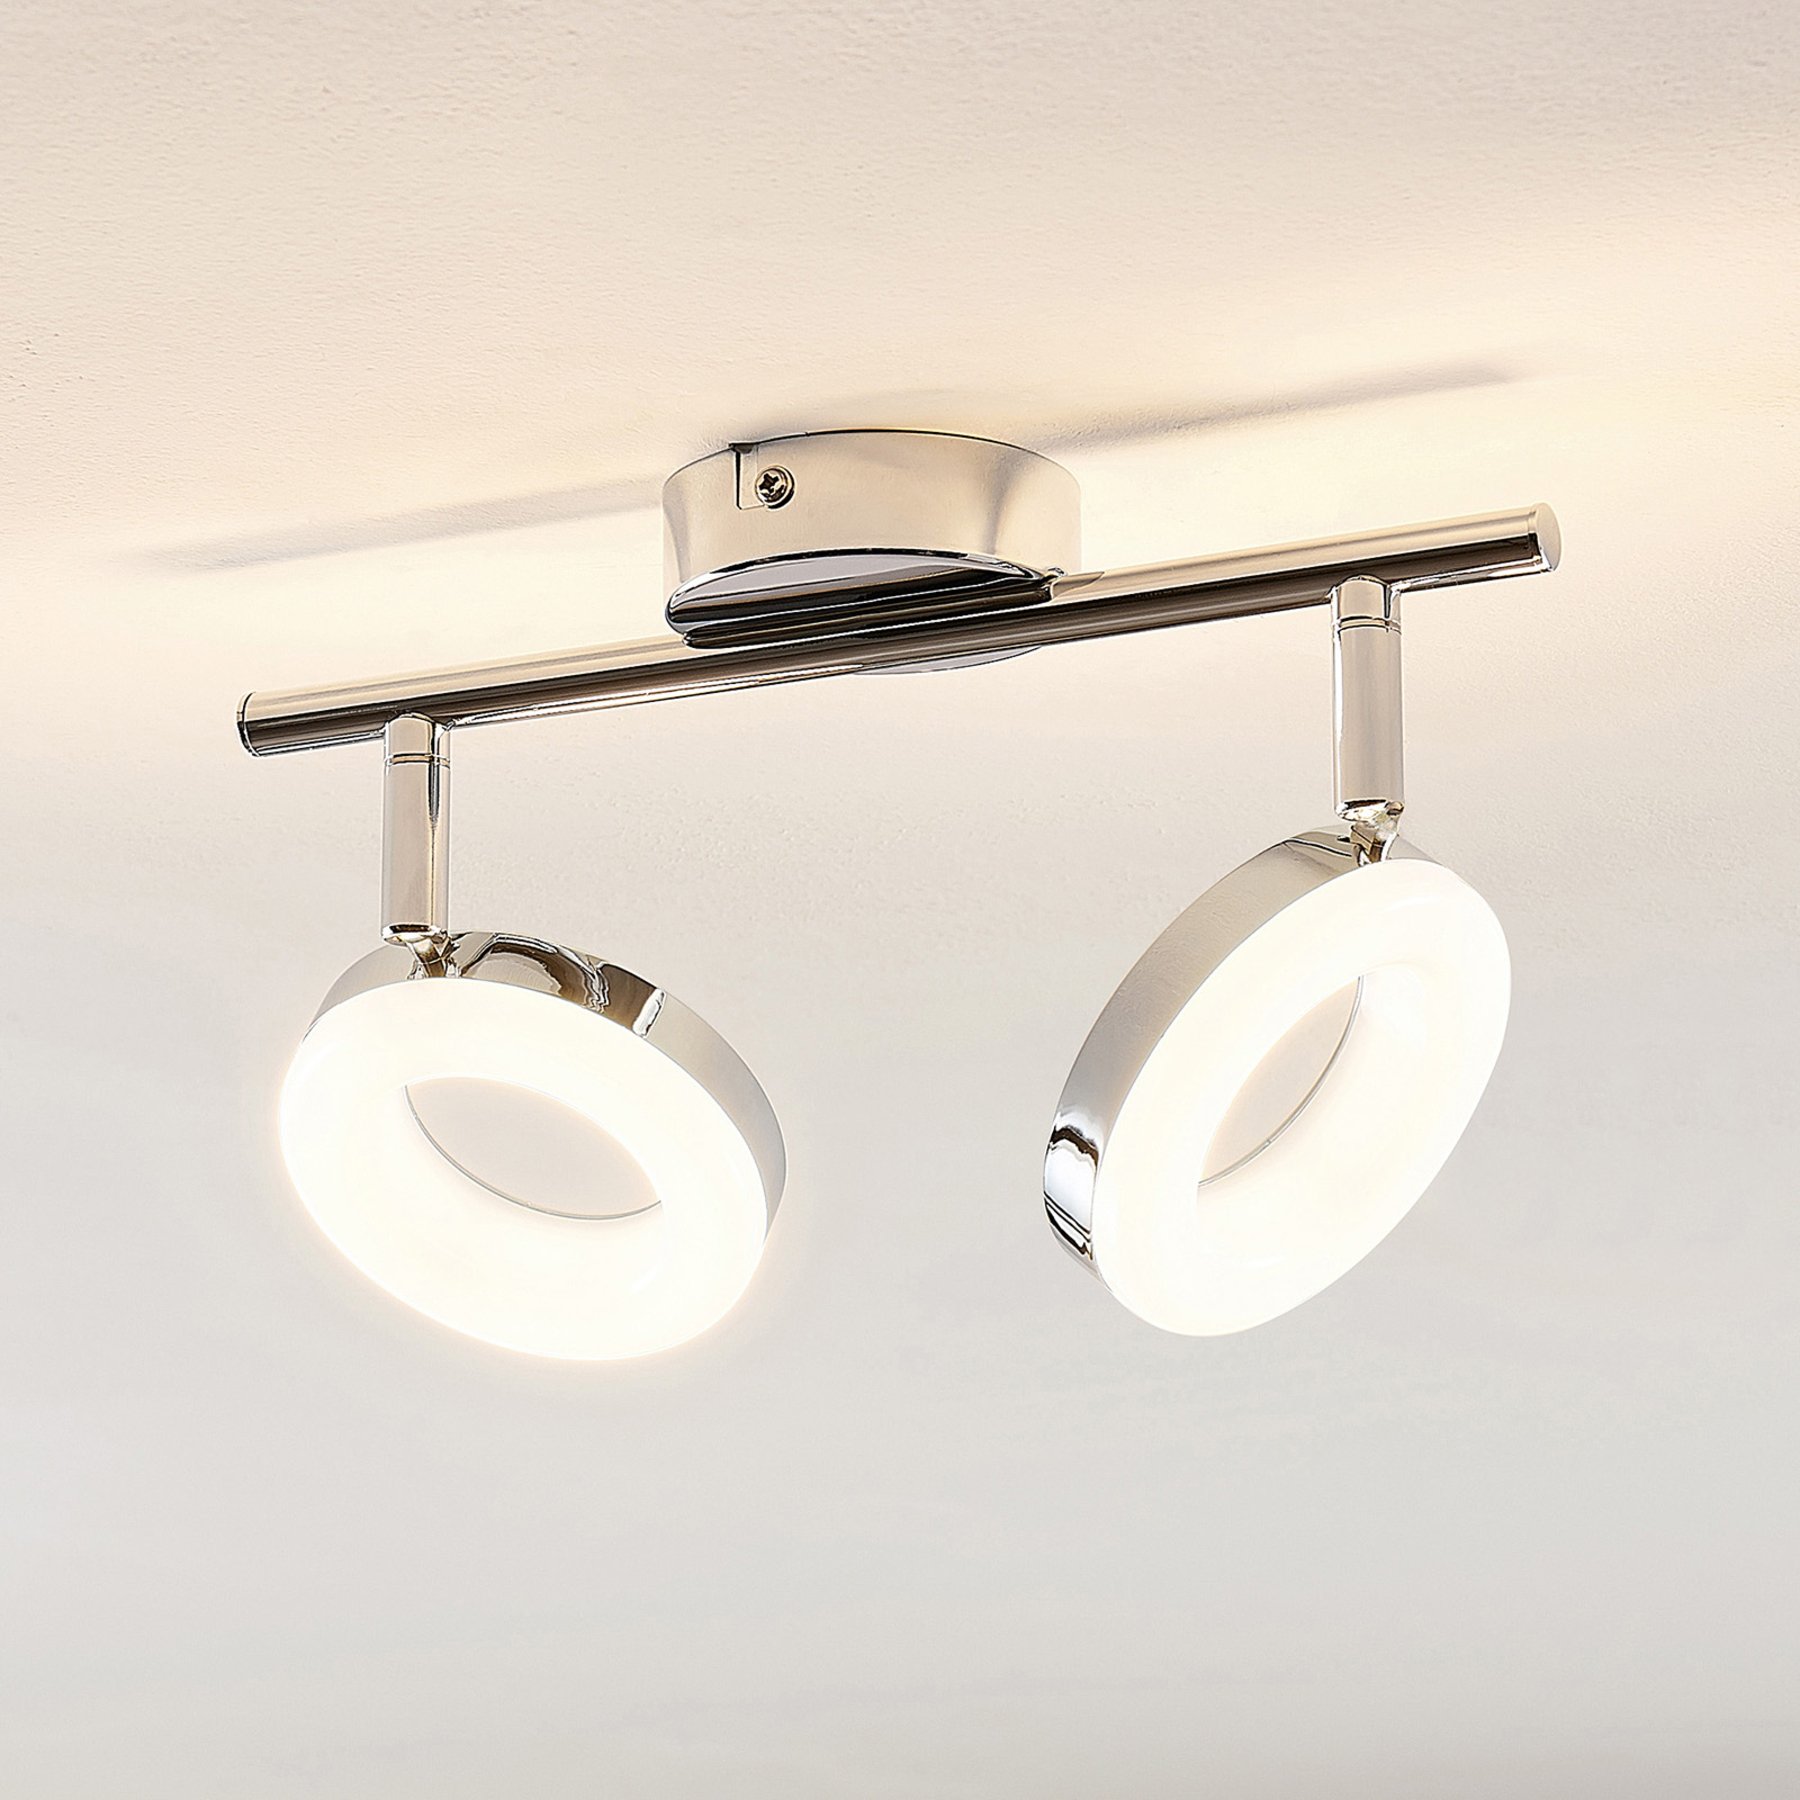 ELC Tioklia lampa sufitowa LED, chrom, 2-punktowa